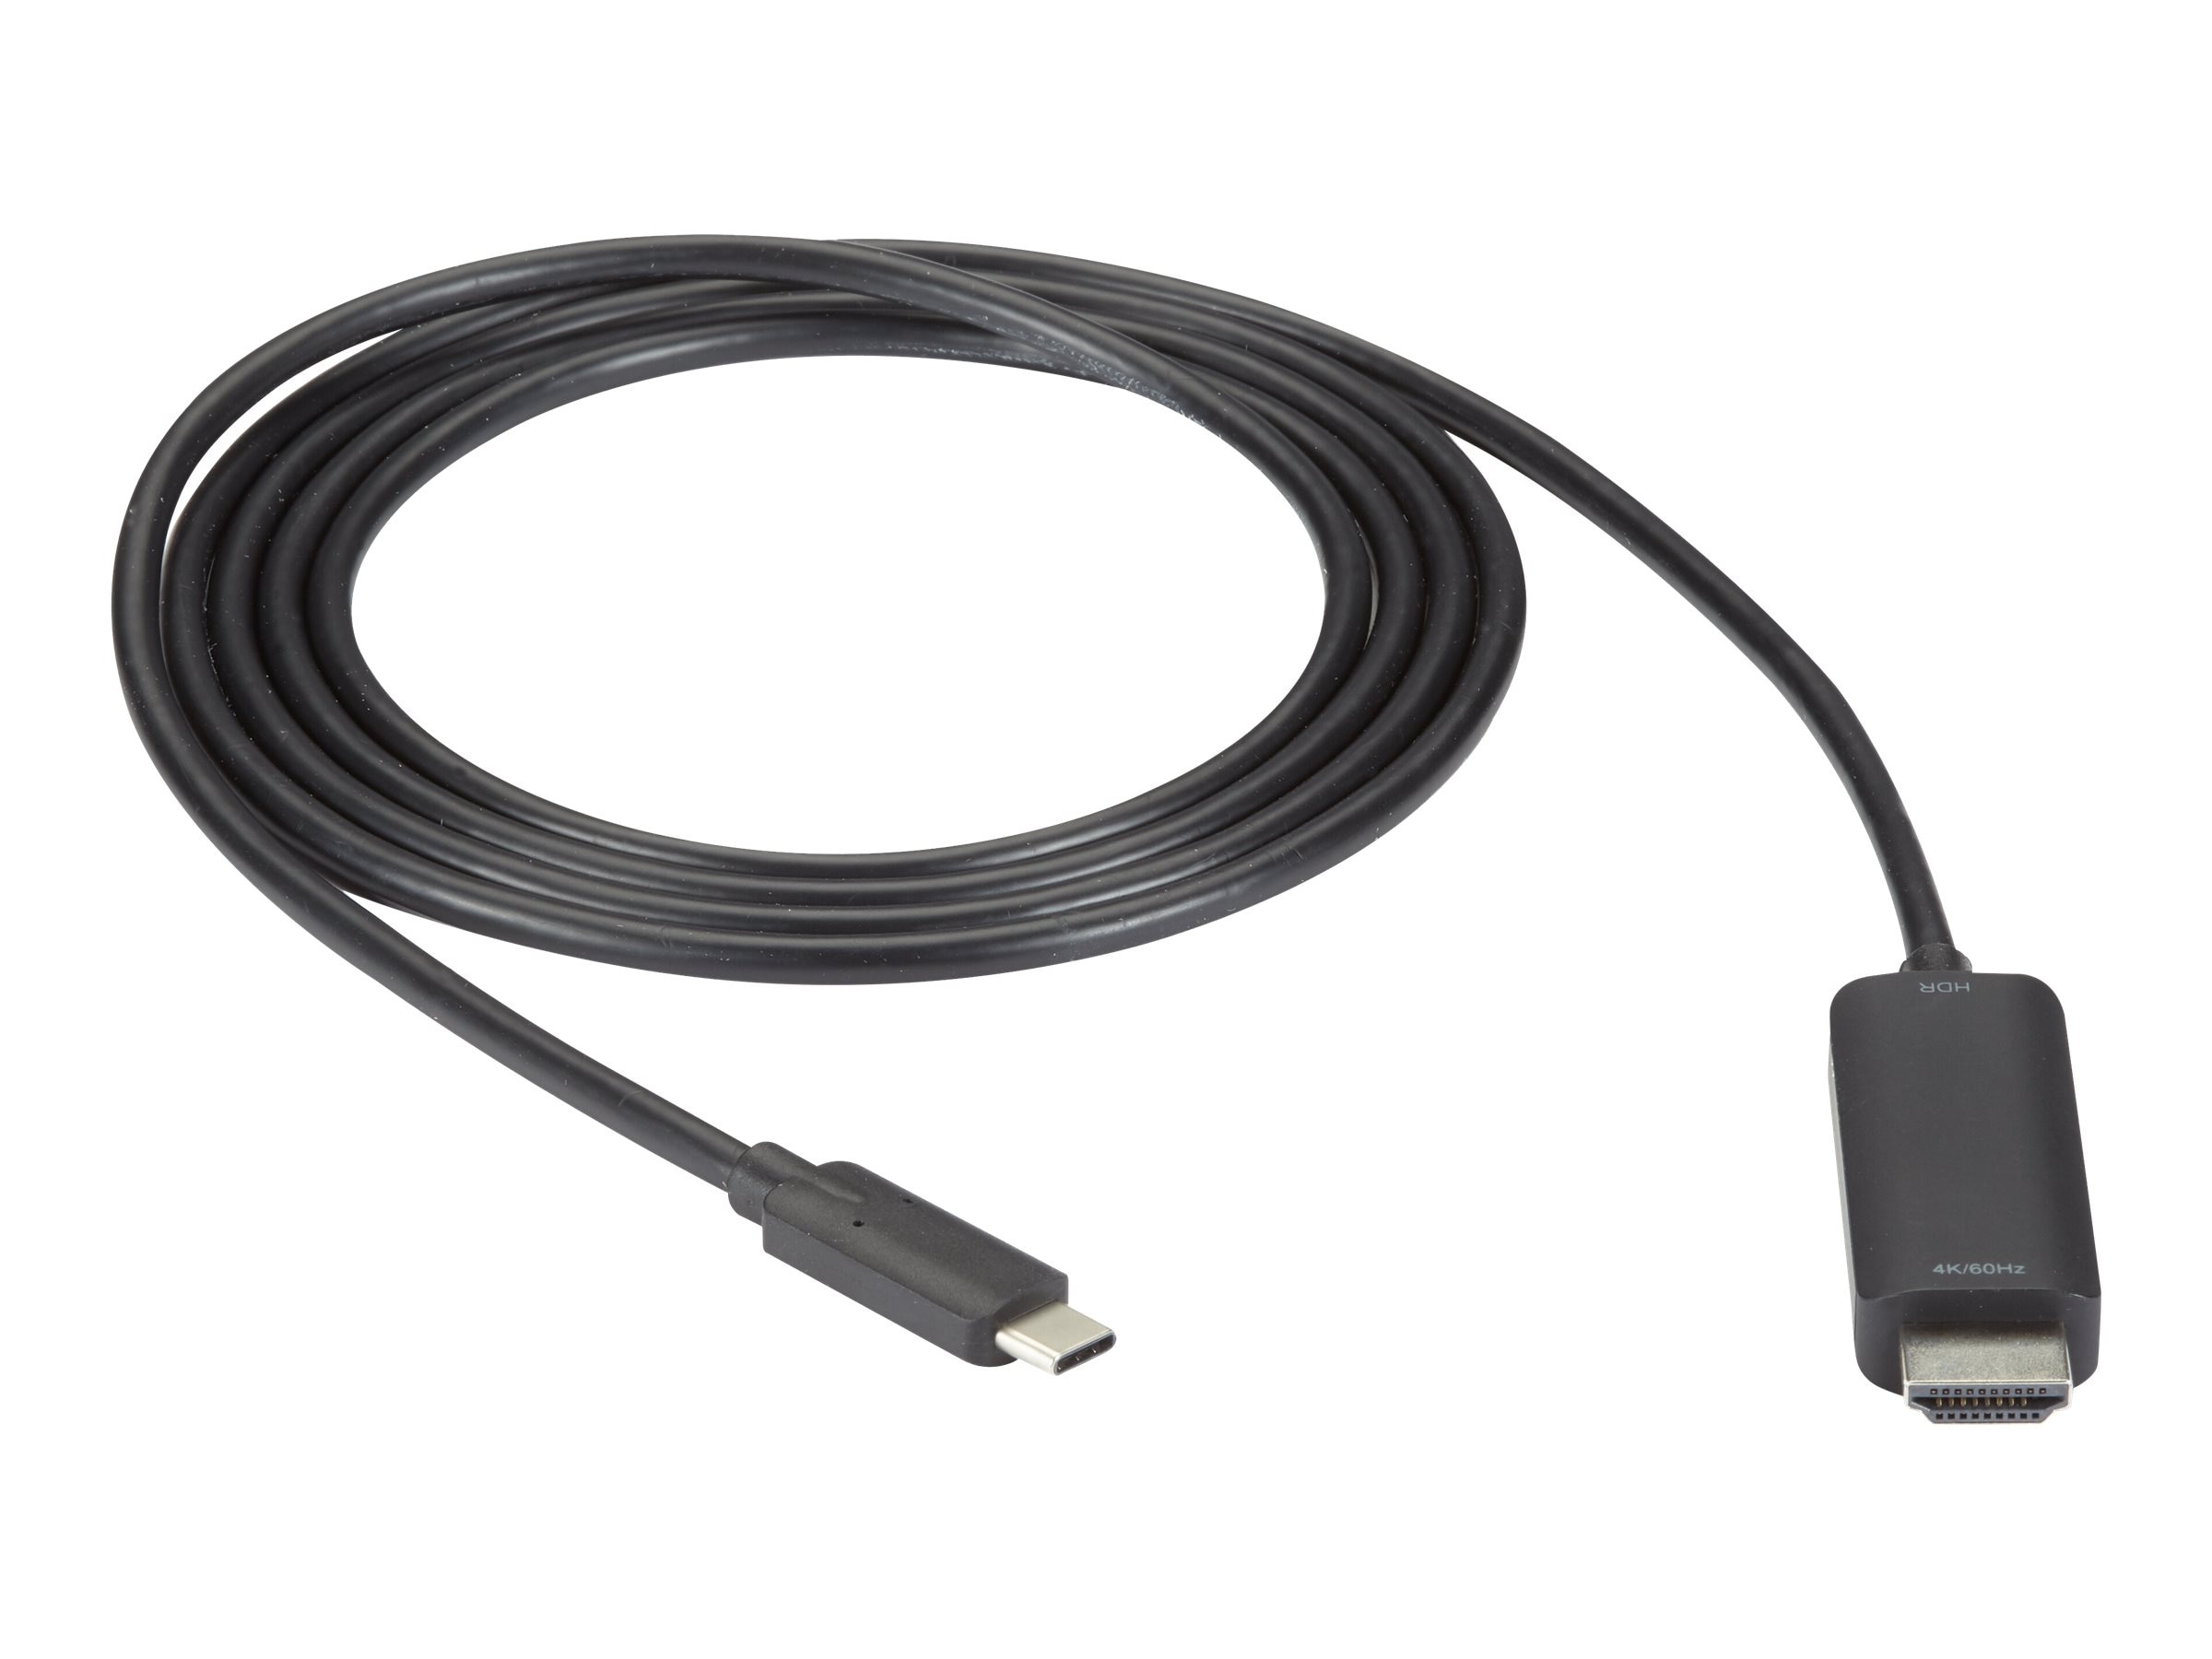 VA-USBC31-HDR4K-003, USB-C Adapter Cable - USB-C to HDMI 2.0